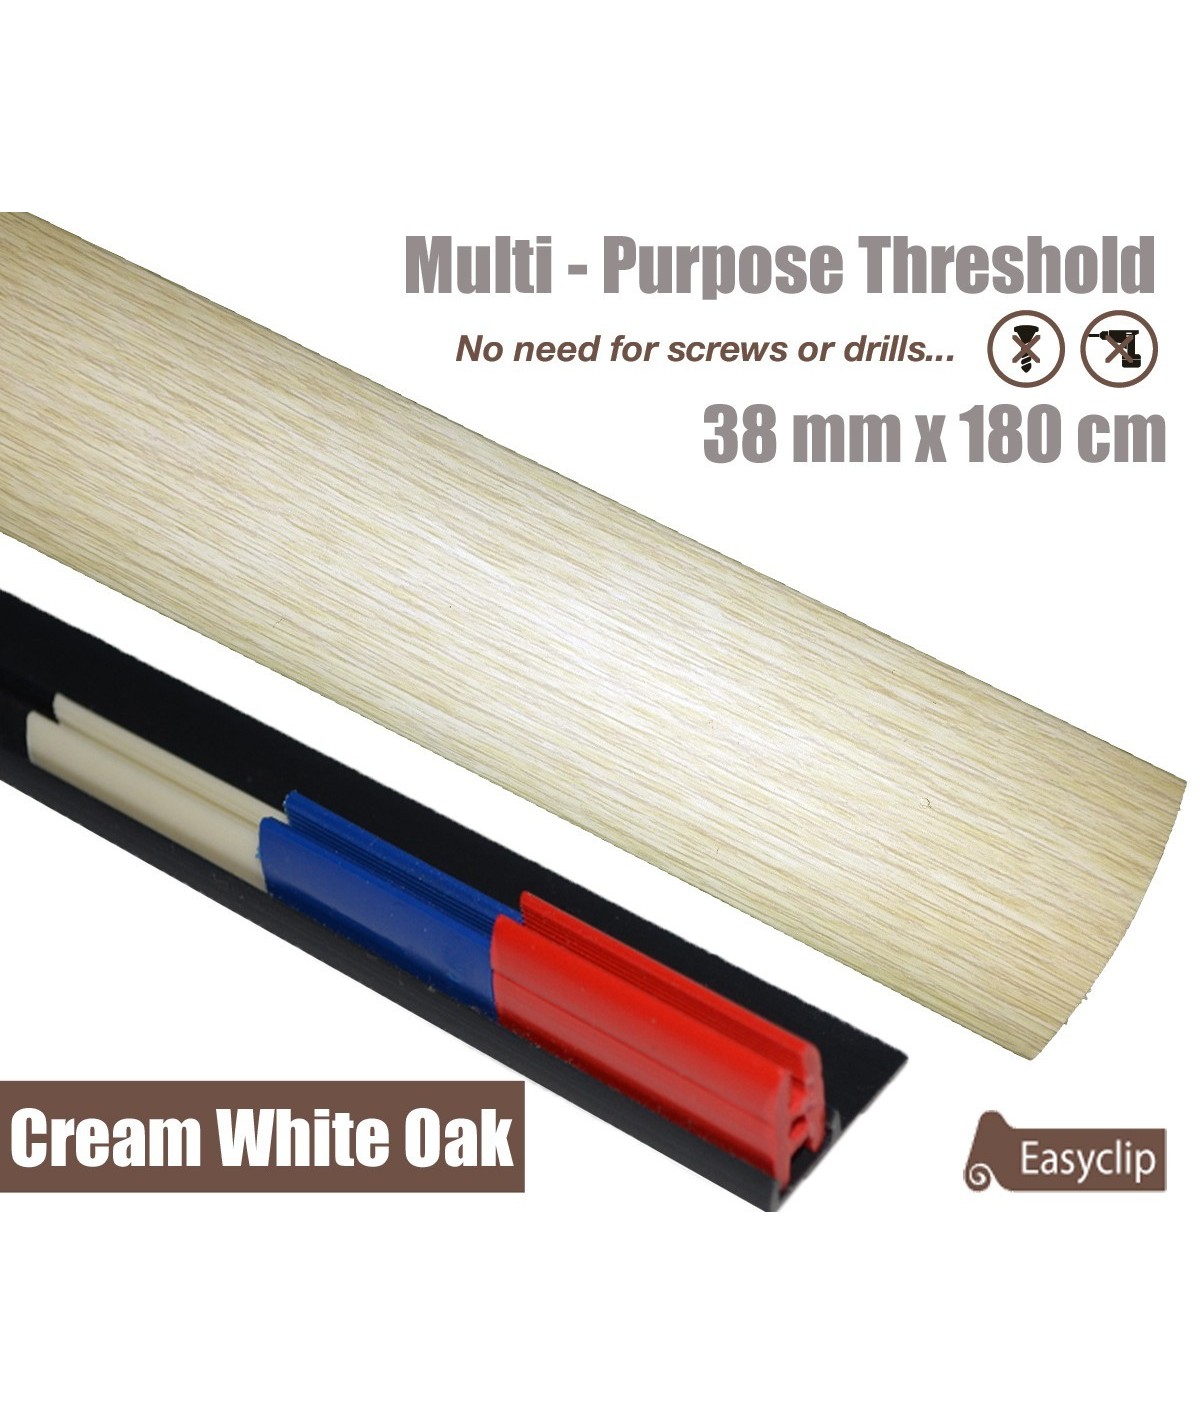 Cream White Oak Threshold Strip 38mm x 180cm laminate multi Purpose Adhesive Clip System